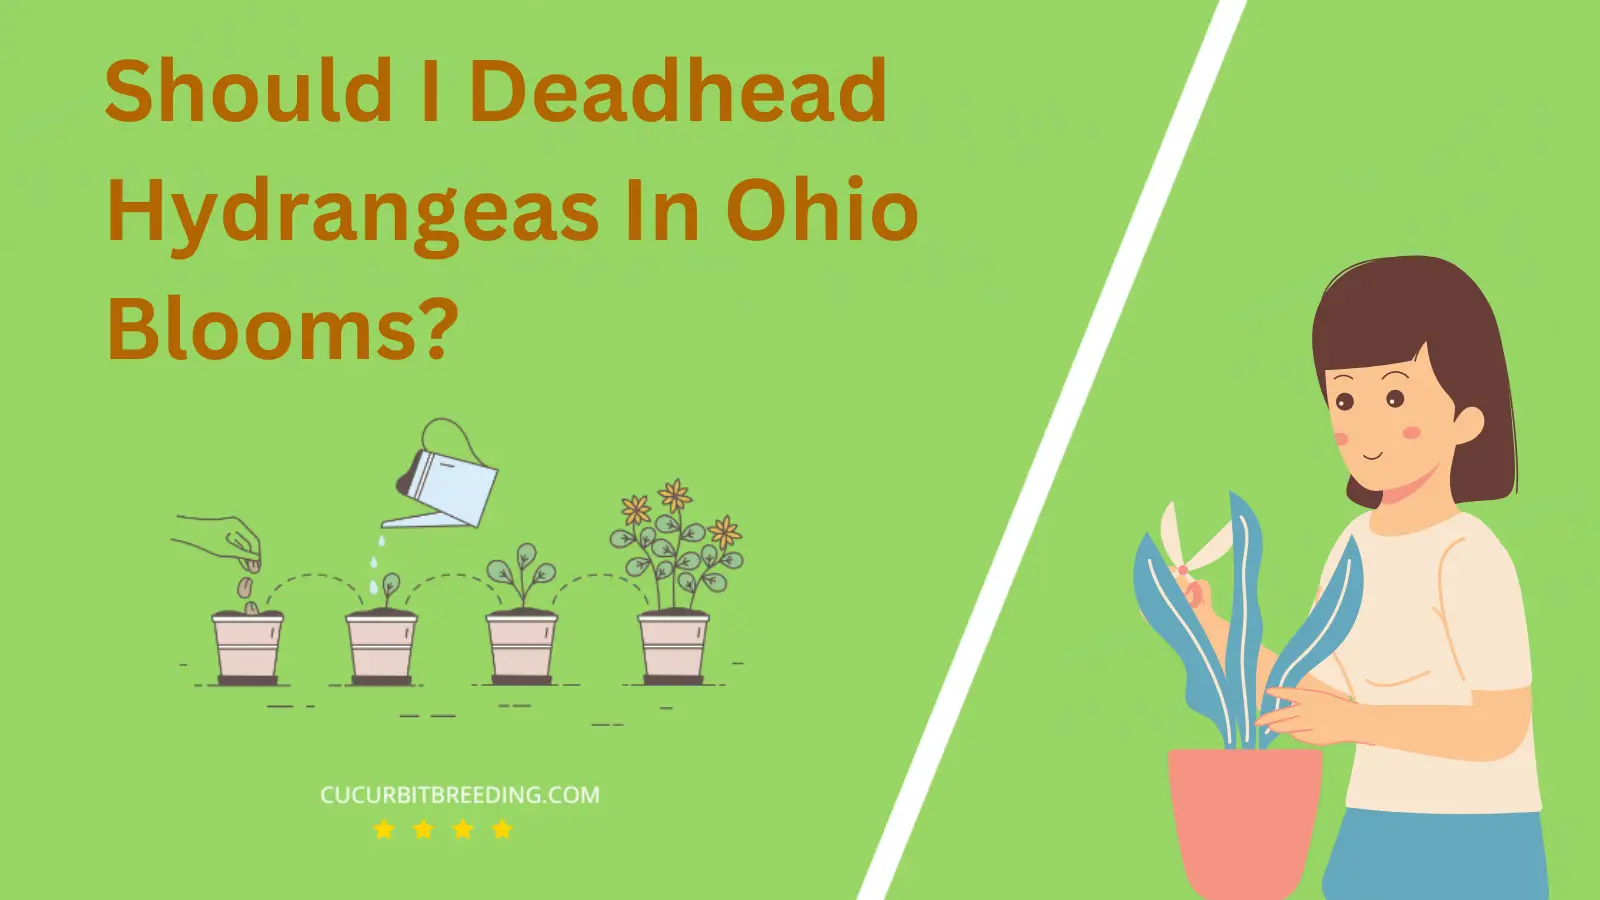 Should I Deadhead Hydrangeas In Ohio Blooms?